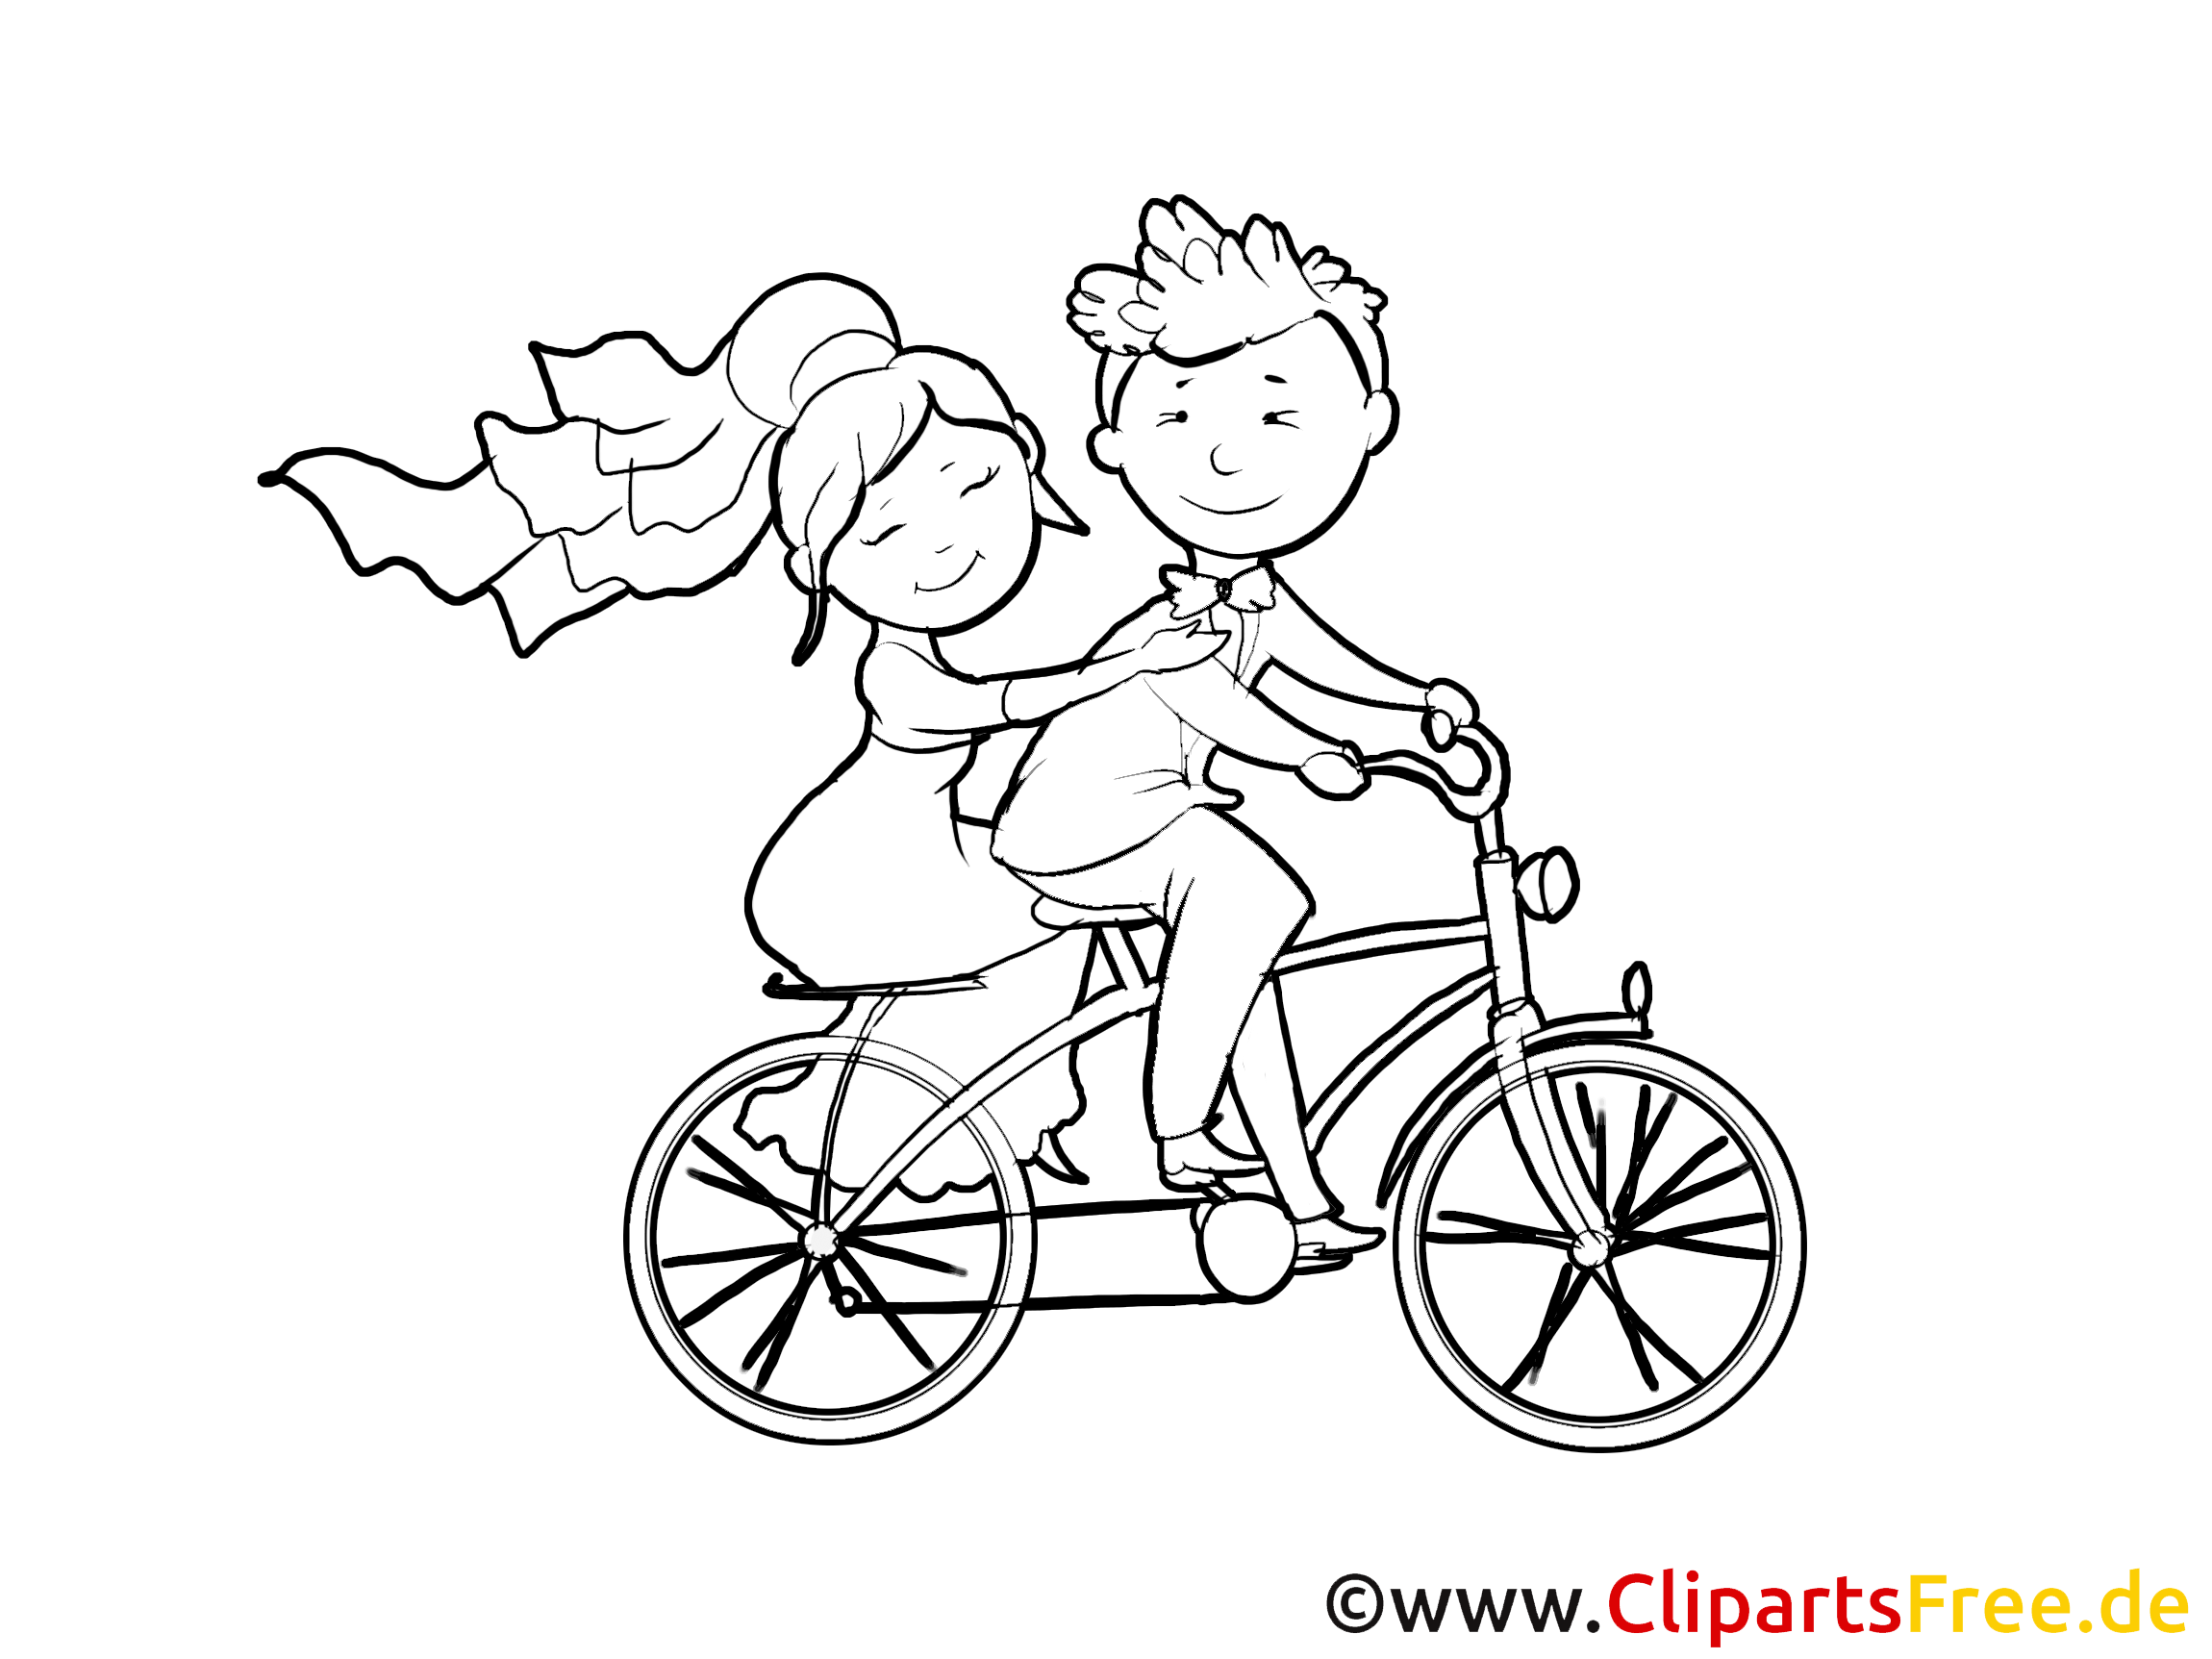 cliparts fahrrad - photo #17